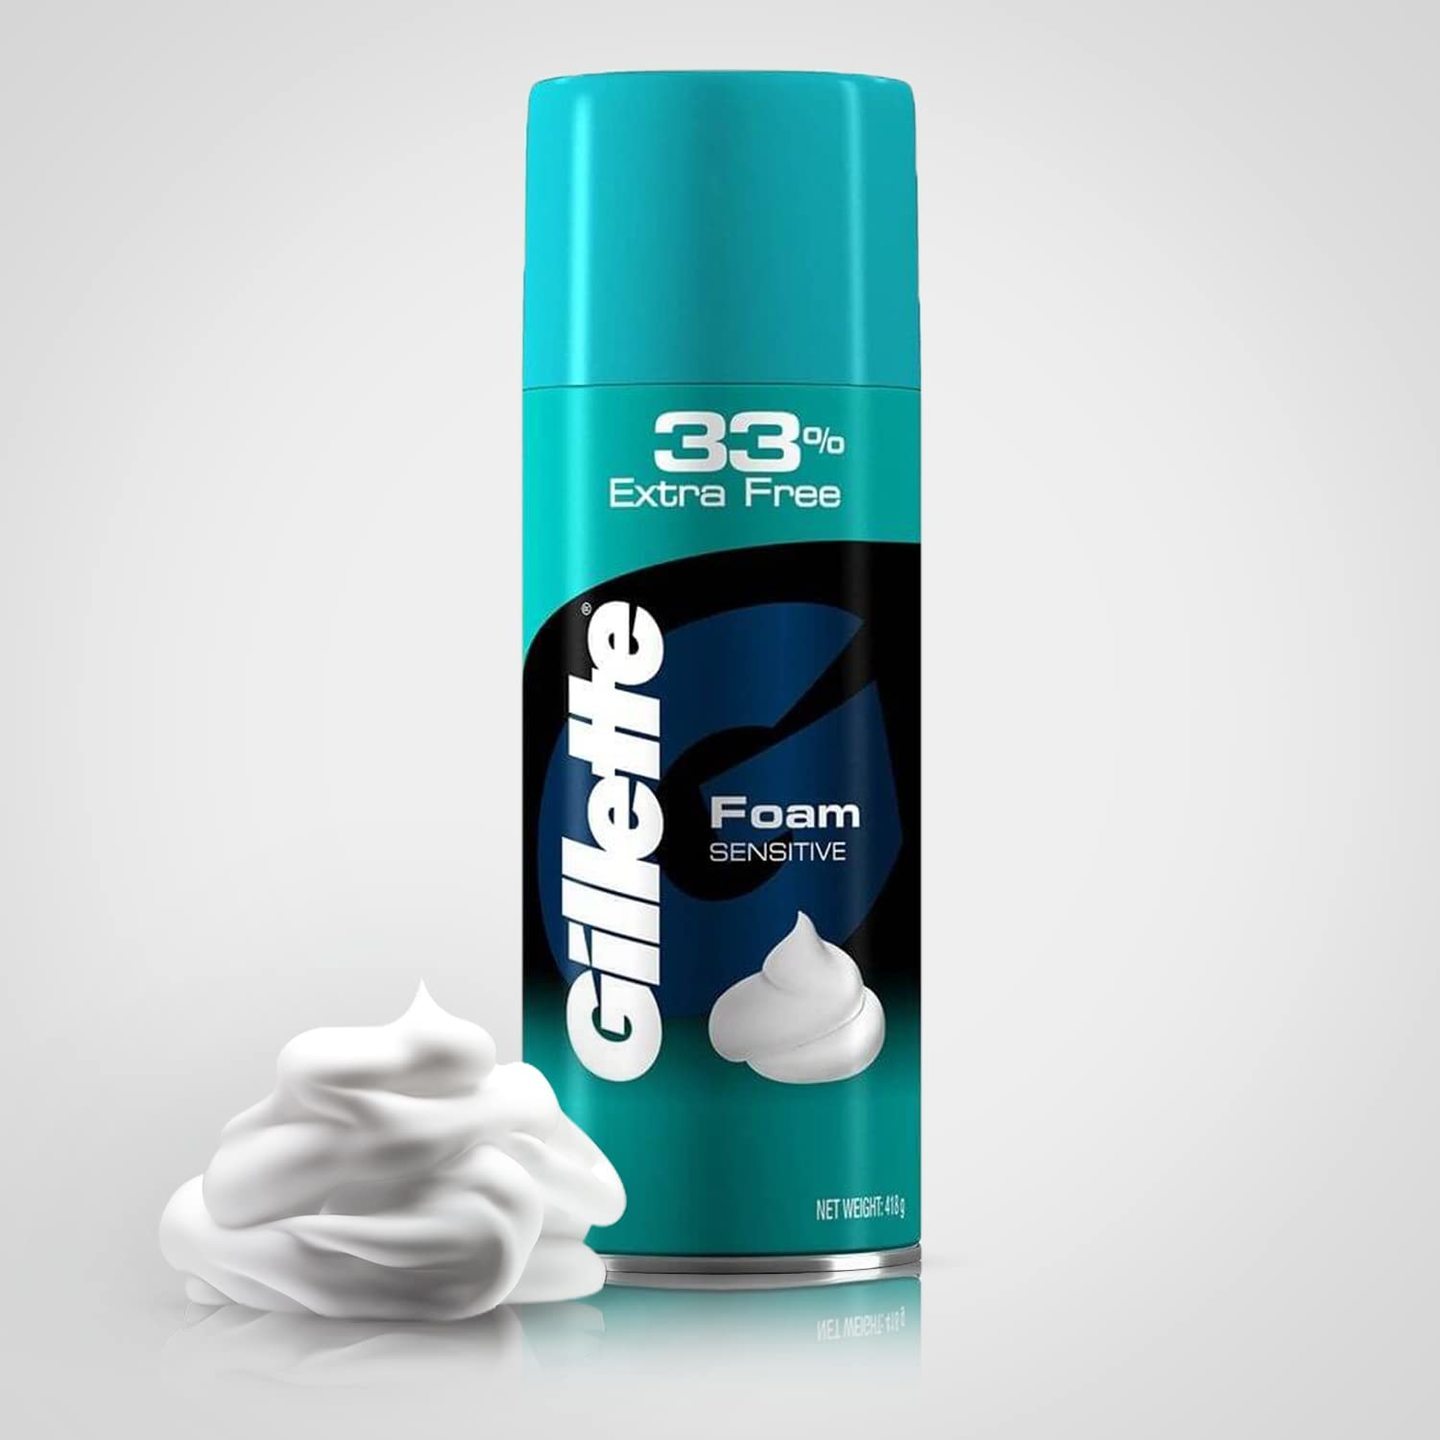 Gillette Classic Sensitive Shave Foam - 418 g 33 extra